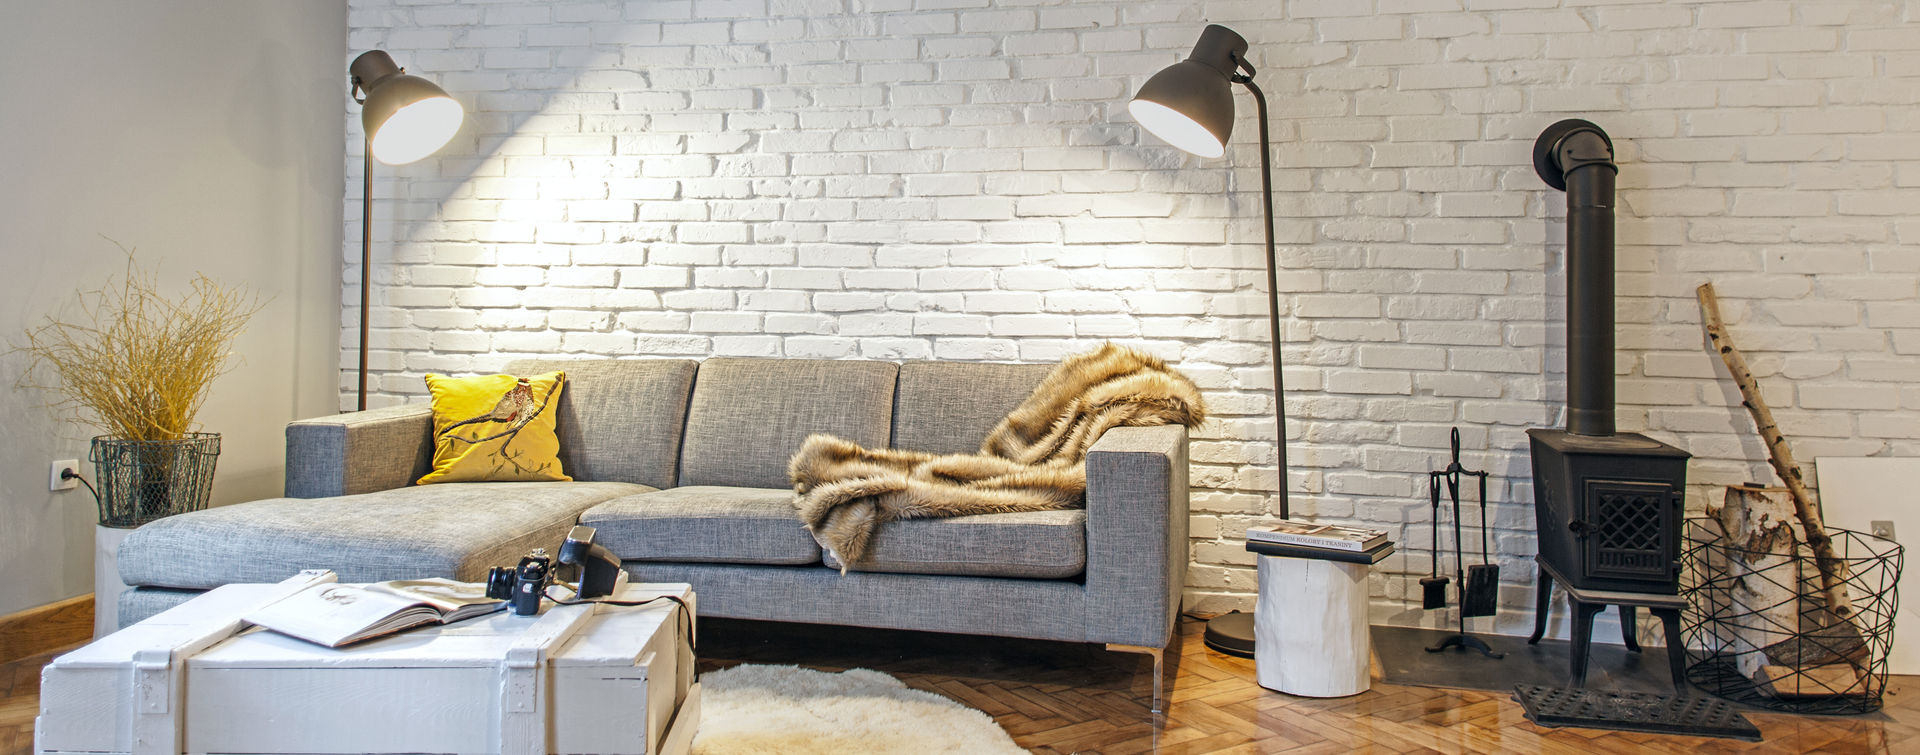 Apartament w Sopocie, DoMilimetra DoMilimetra Salas de estilo moderno